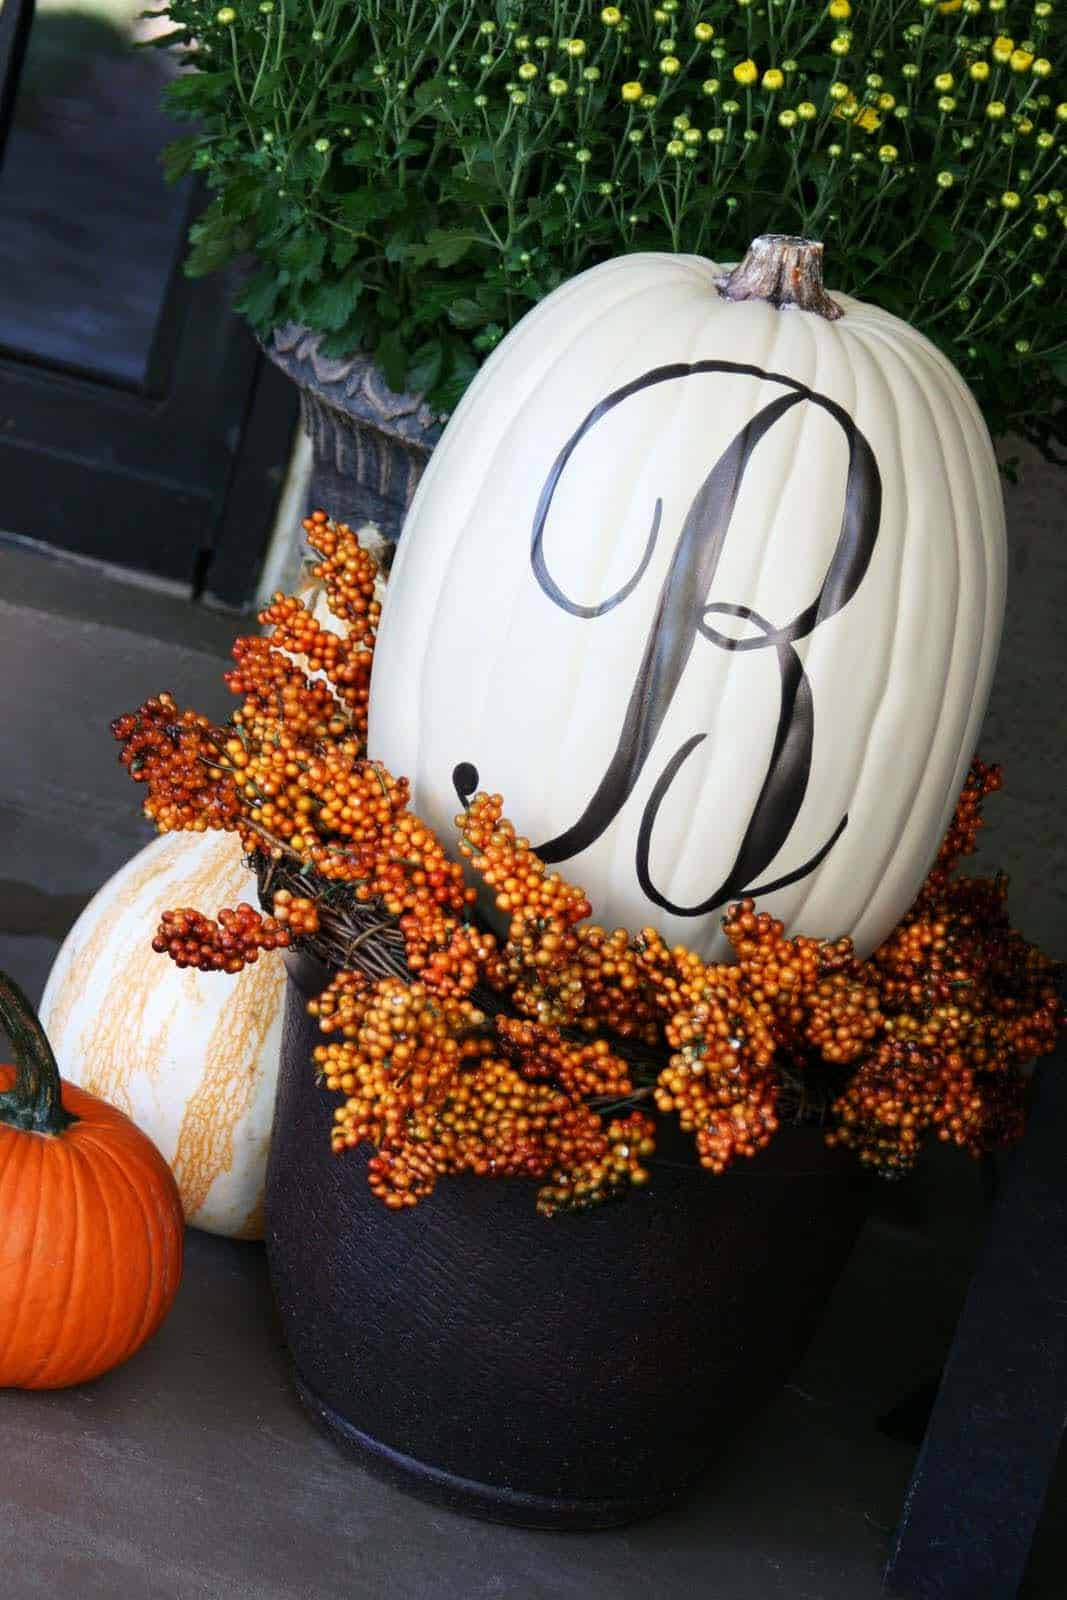 Fall Pumpkin Carving Ideas
 31 Amazing fall decorating ideas using white pumpkins